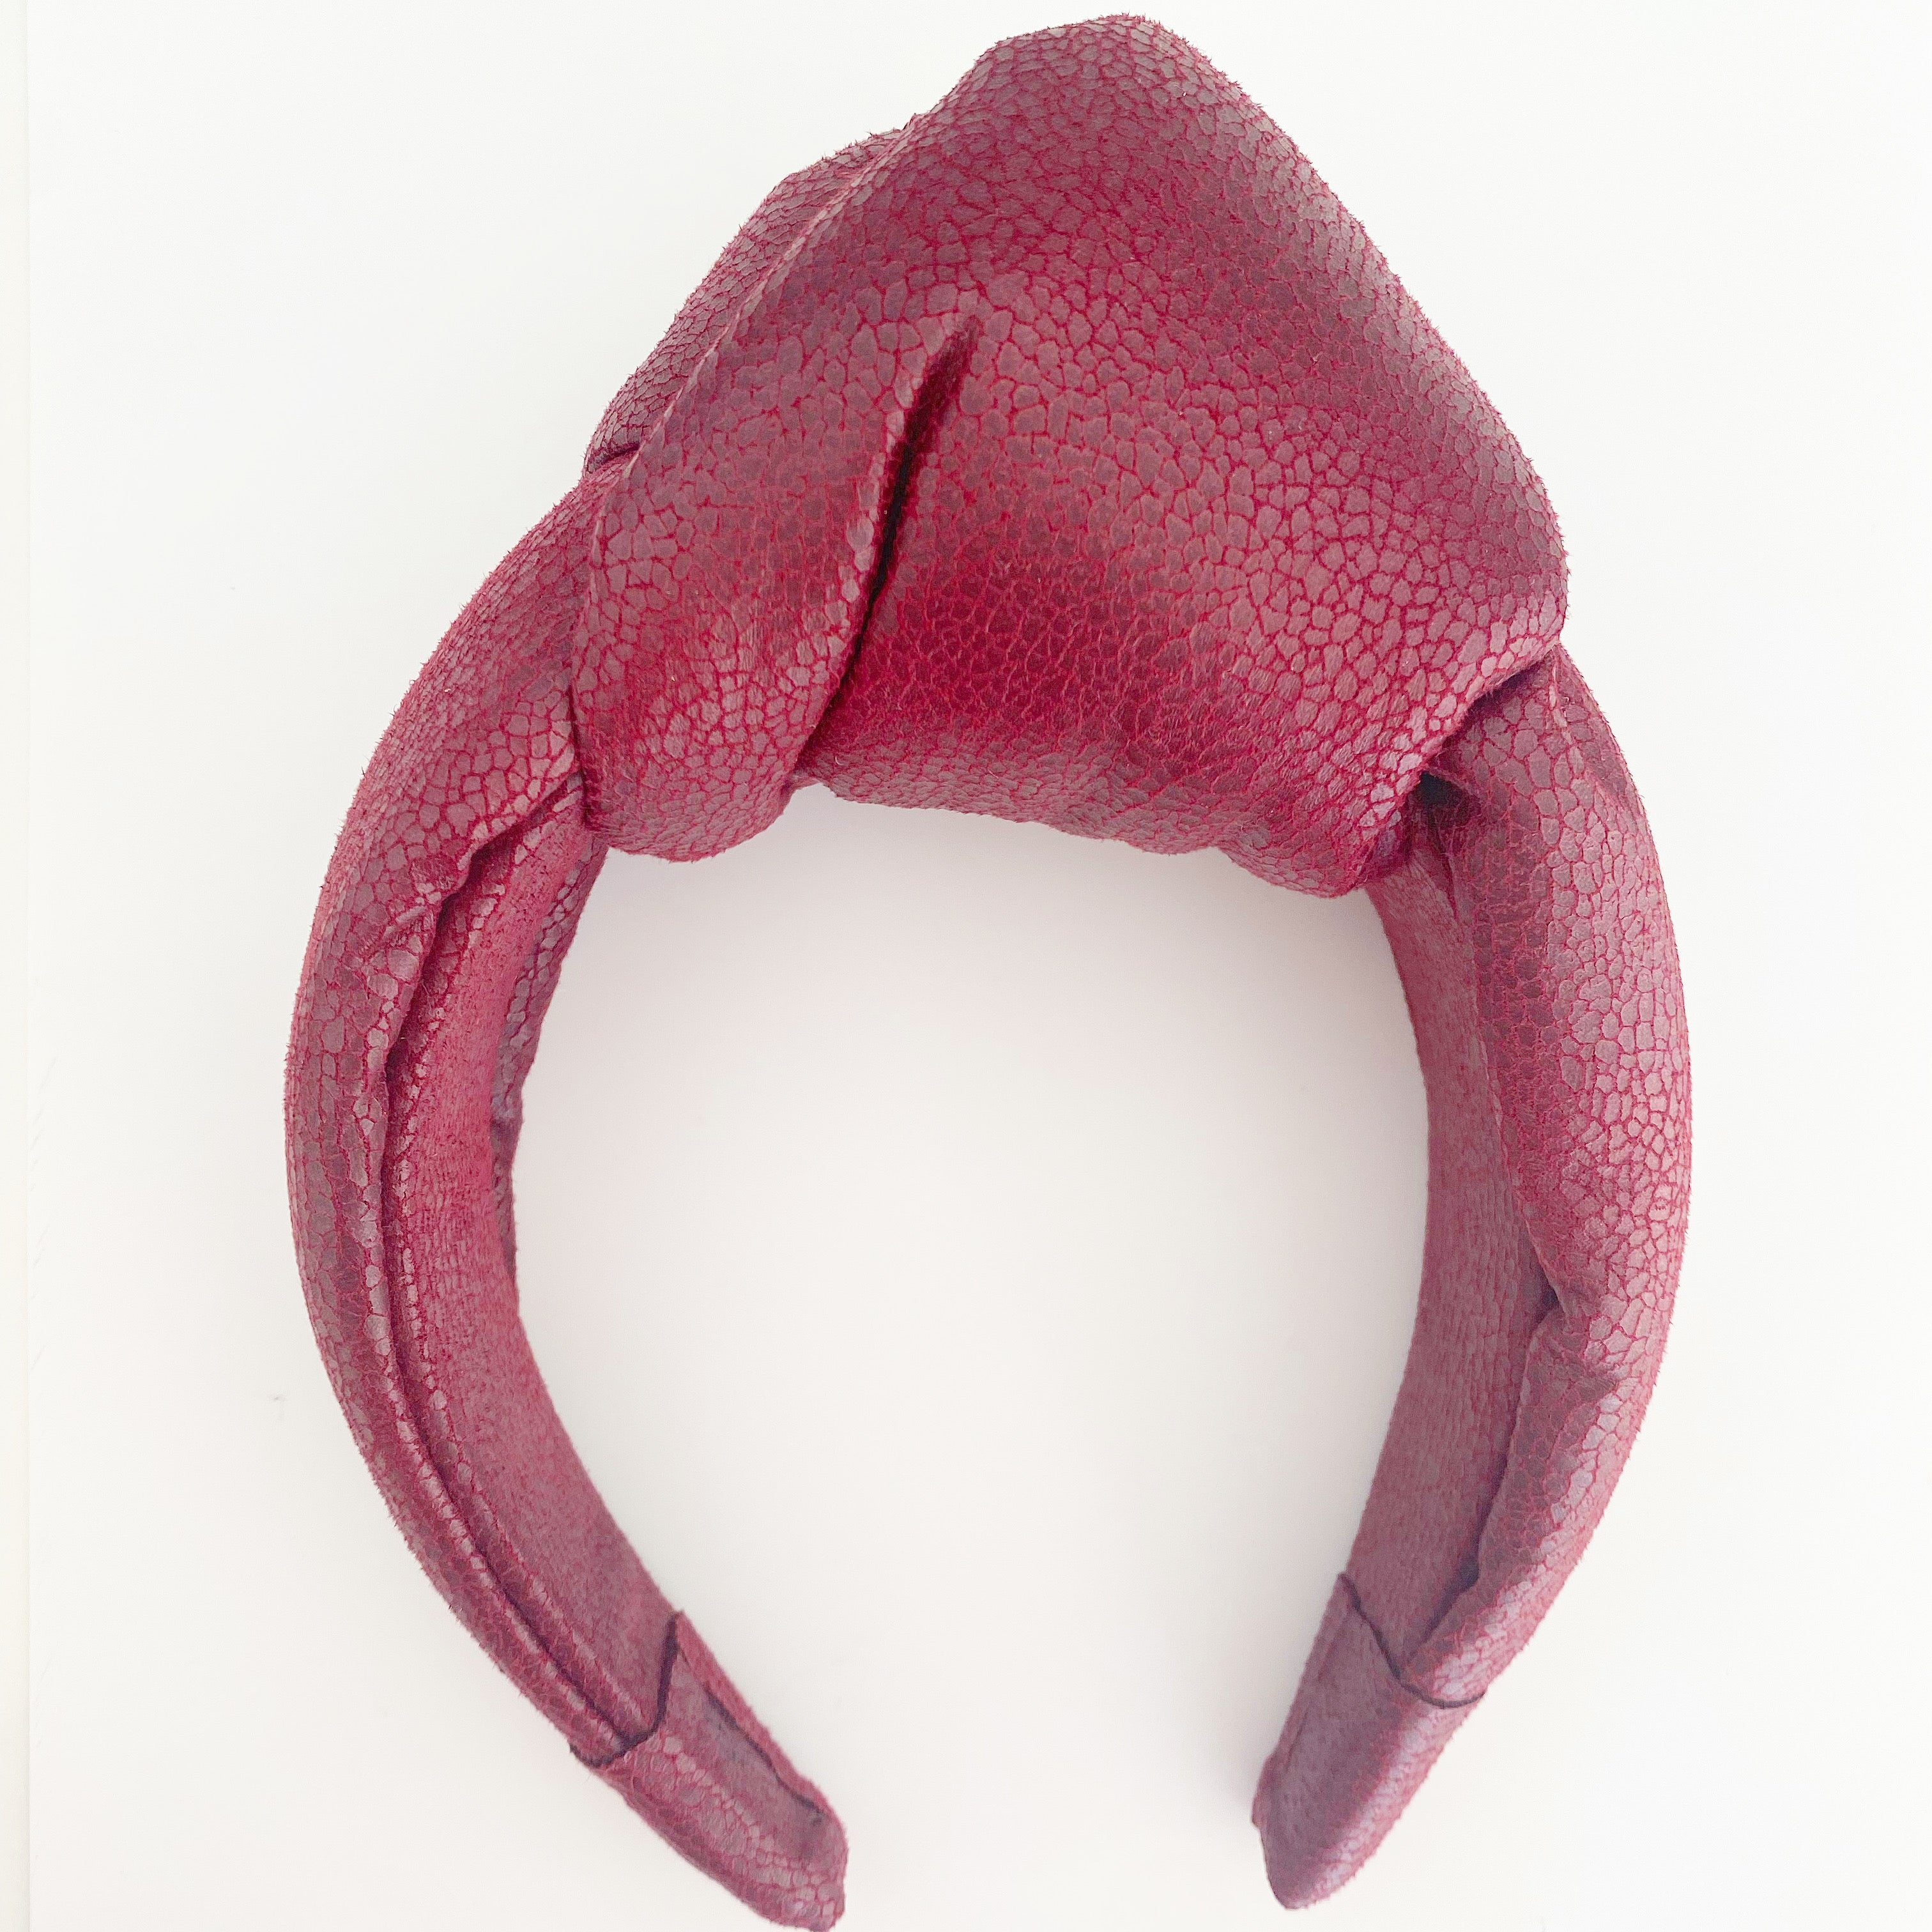 rock + bone handmade statement Headbands Leather (3 colors)